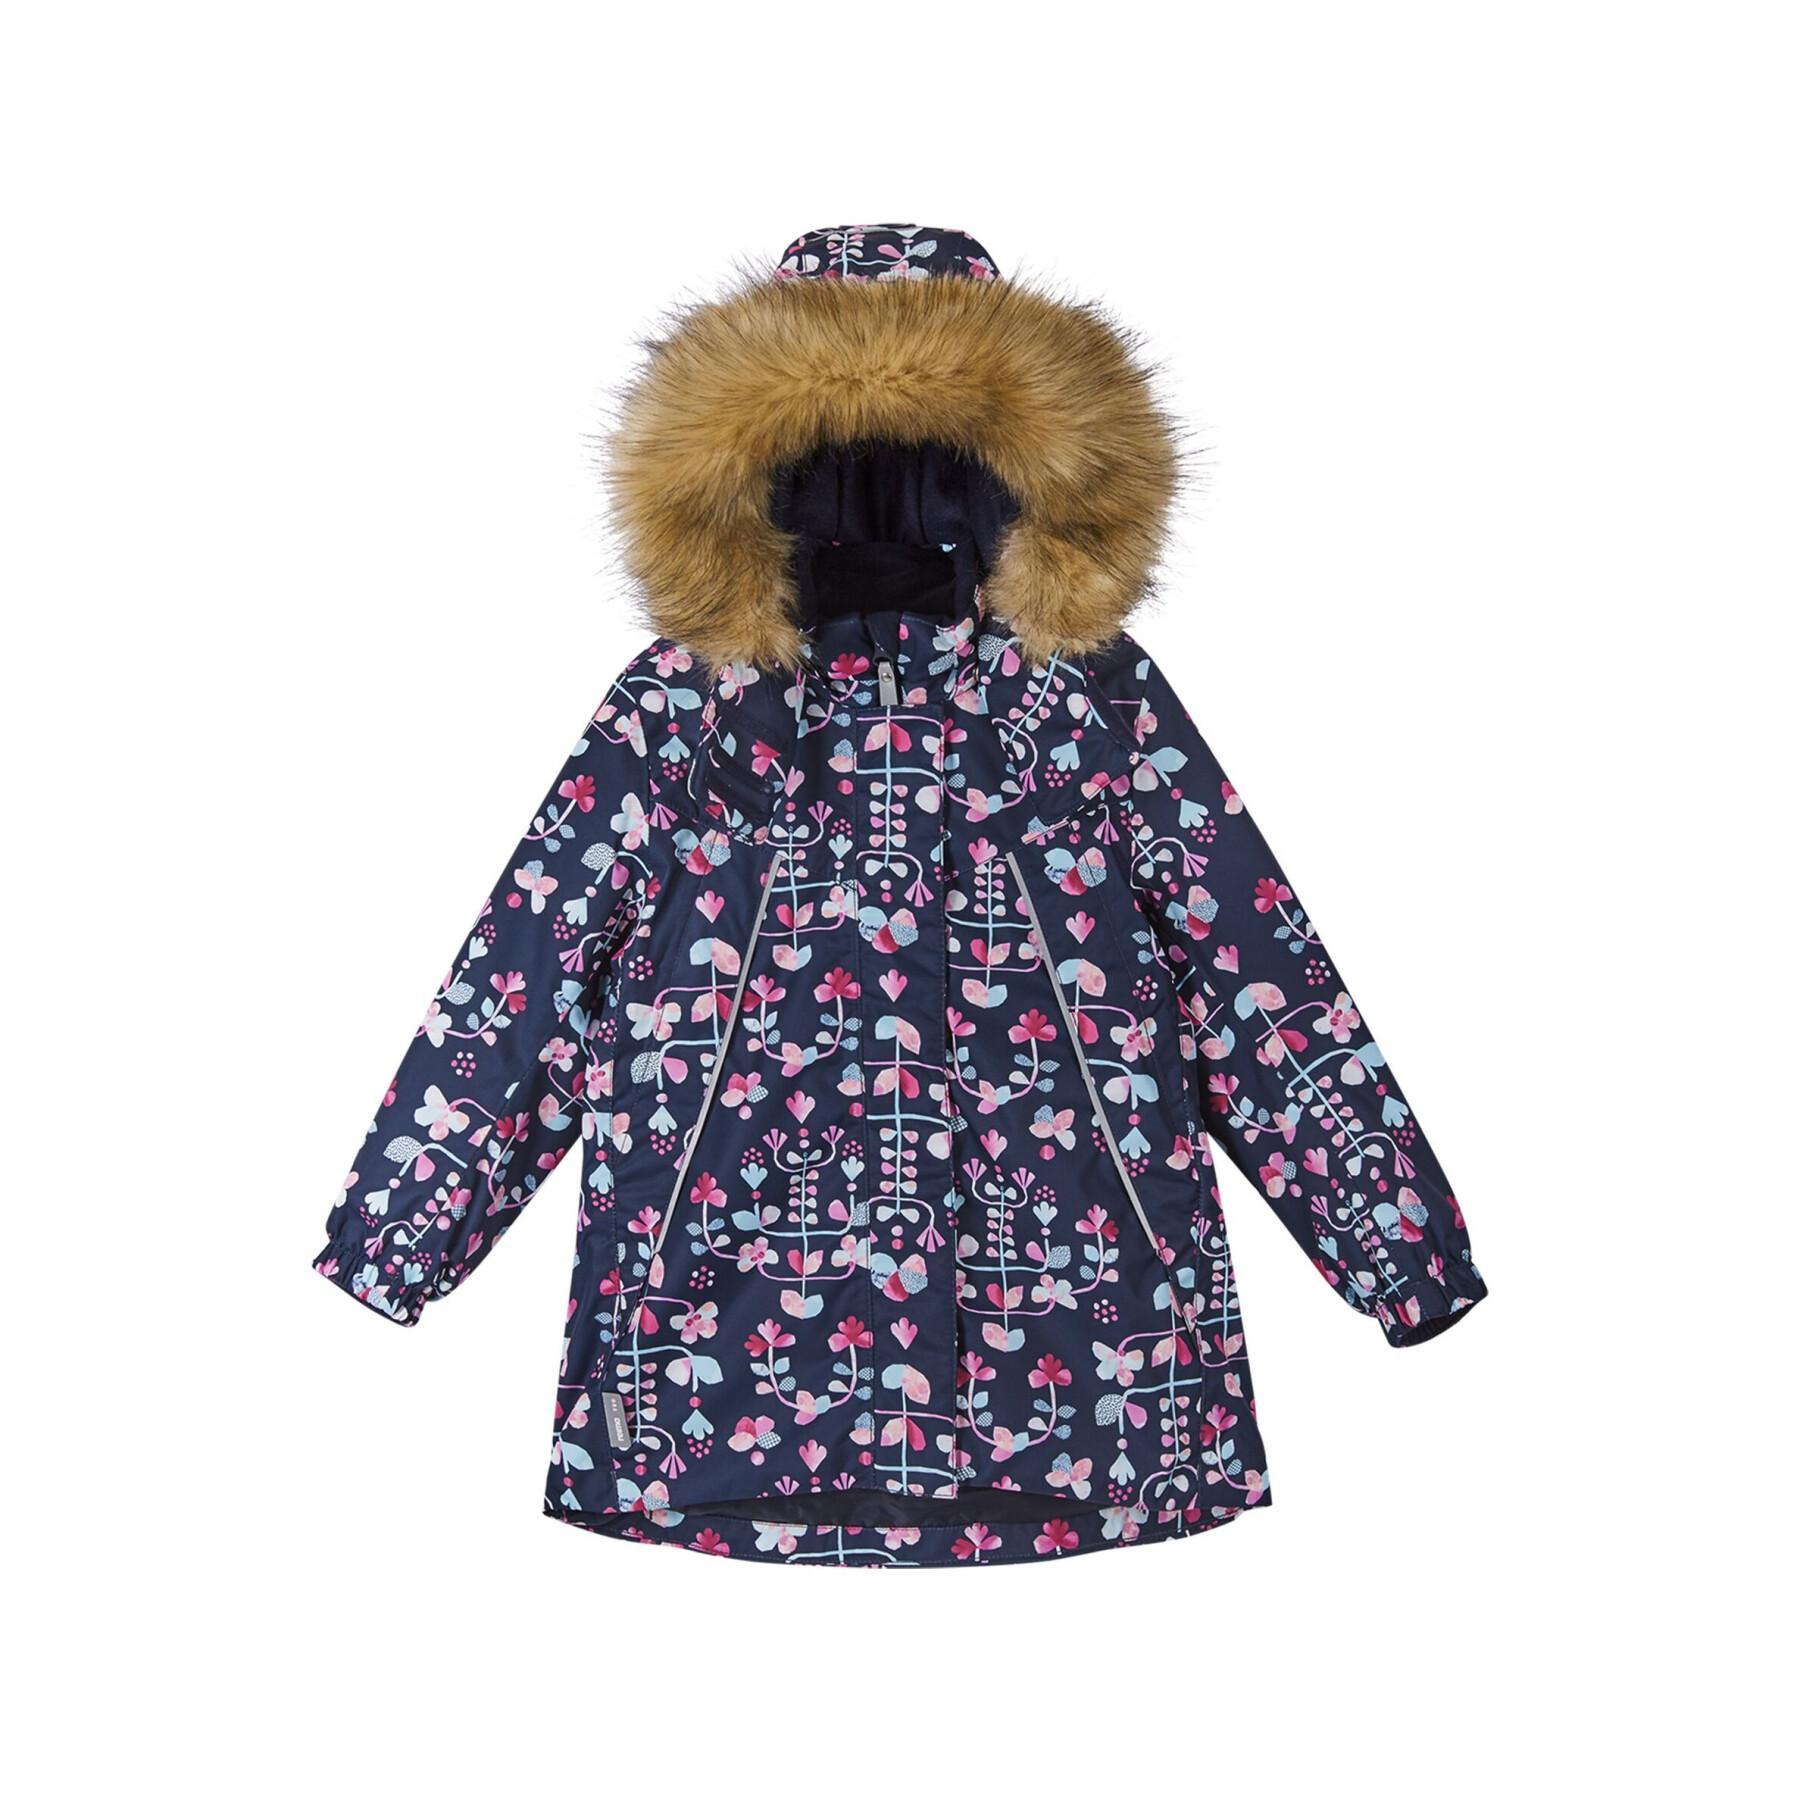 Waterproof jacket for children Reima Reima tec Muhvi